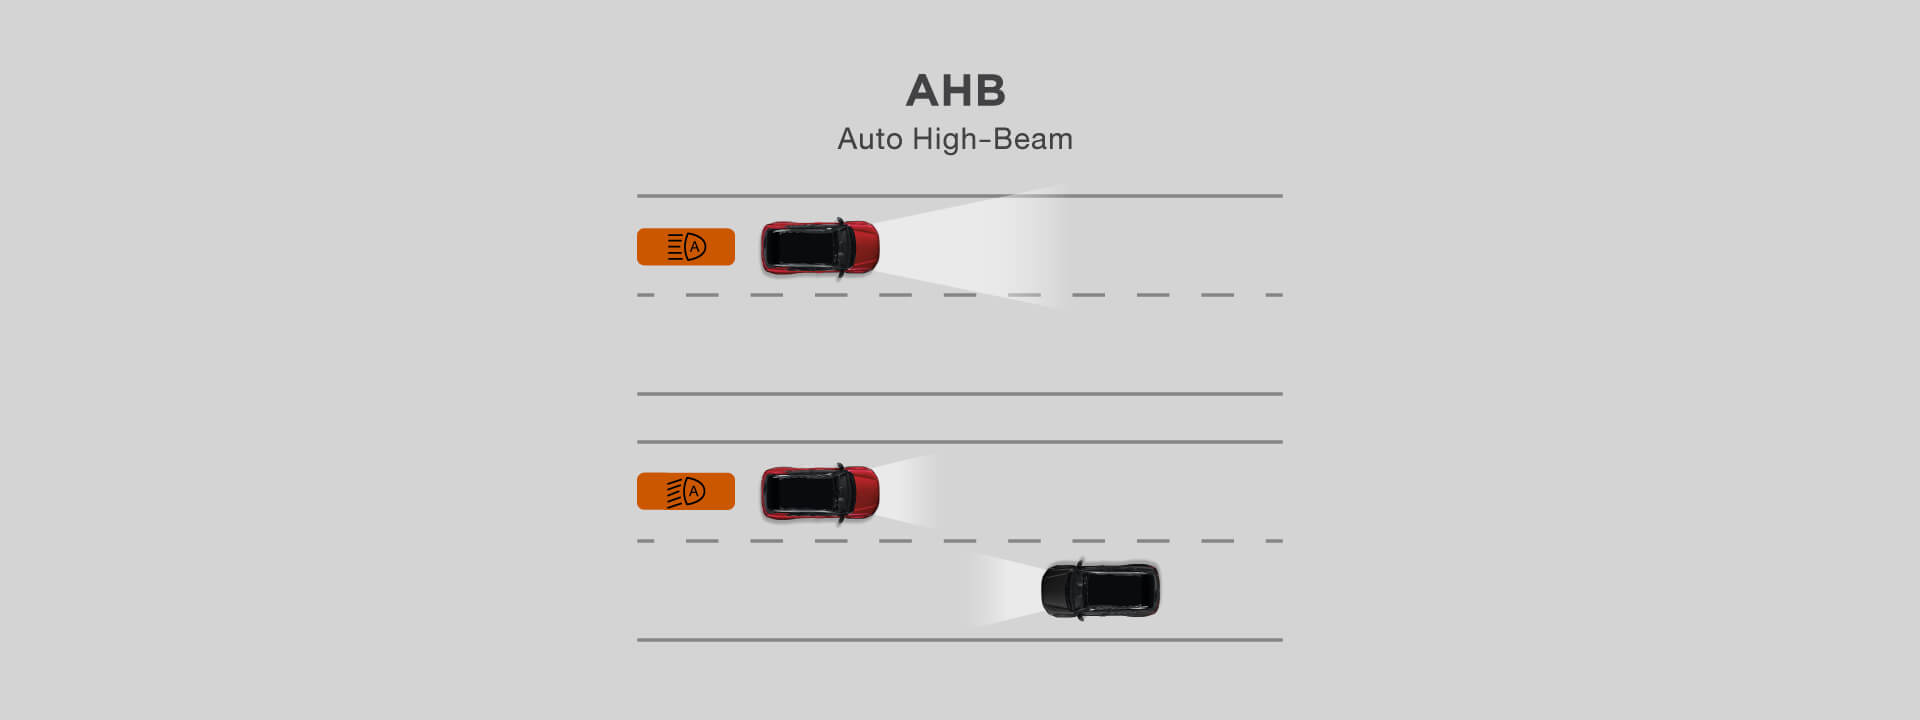 Auto High-Beam : AHB